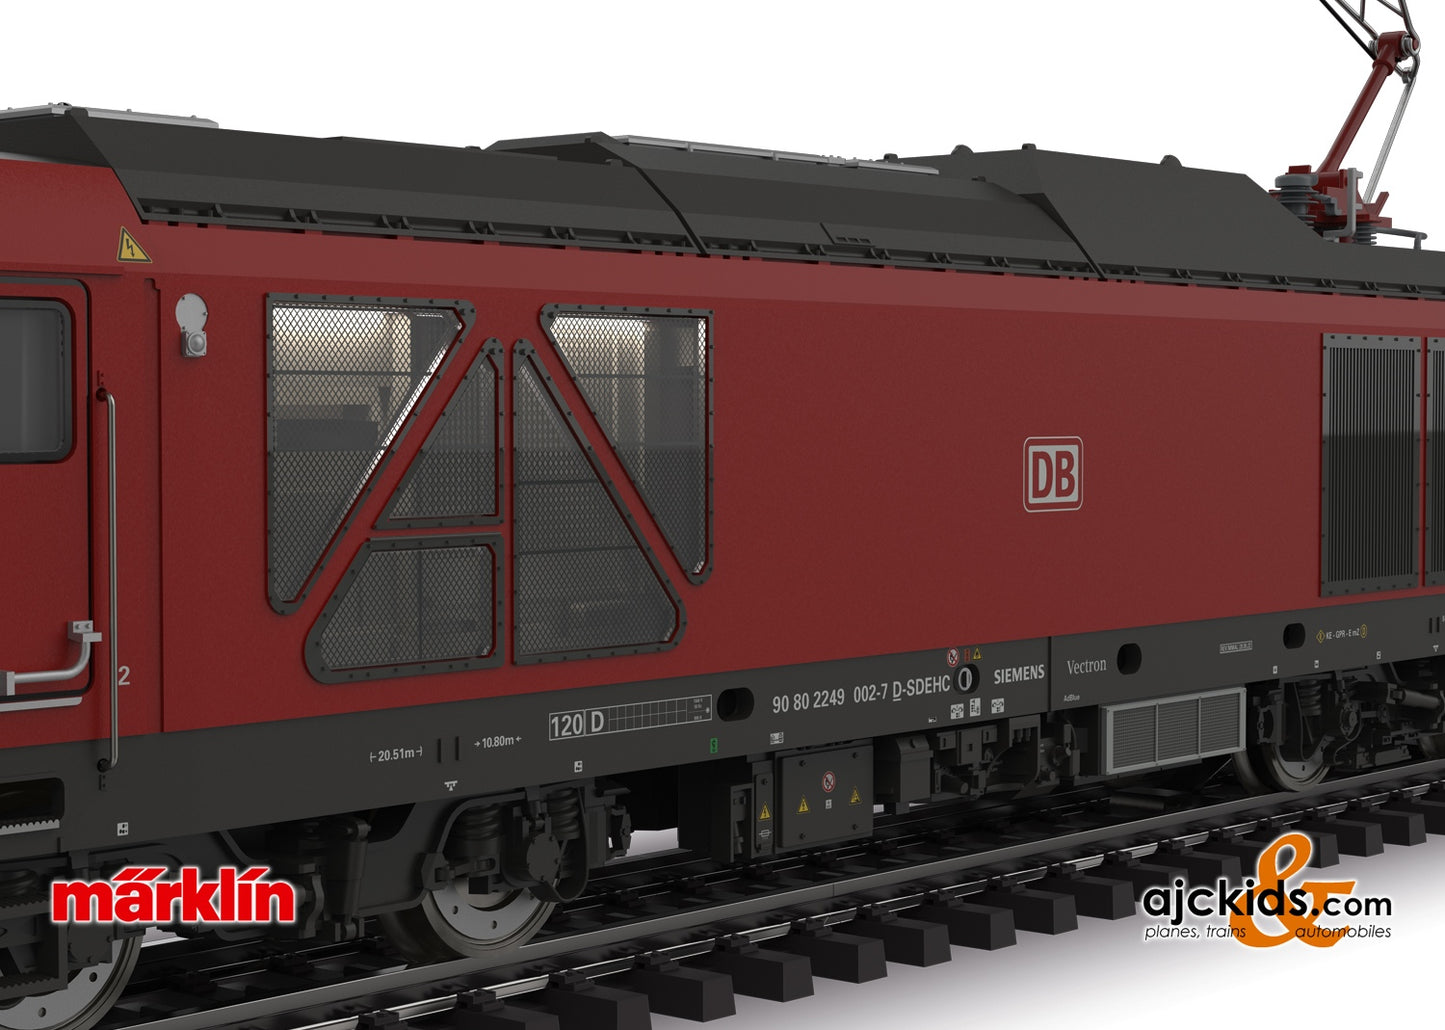 Marklin 39290 - Class 249 Dual Power Locomotive